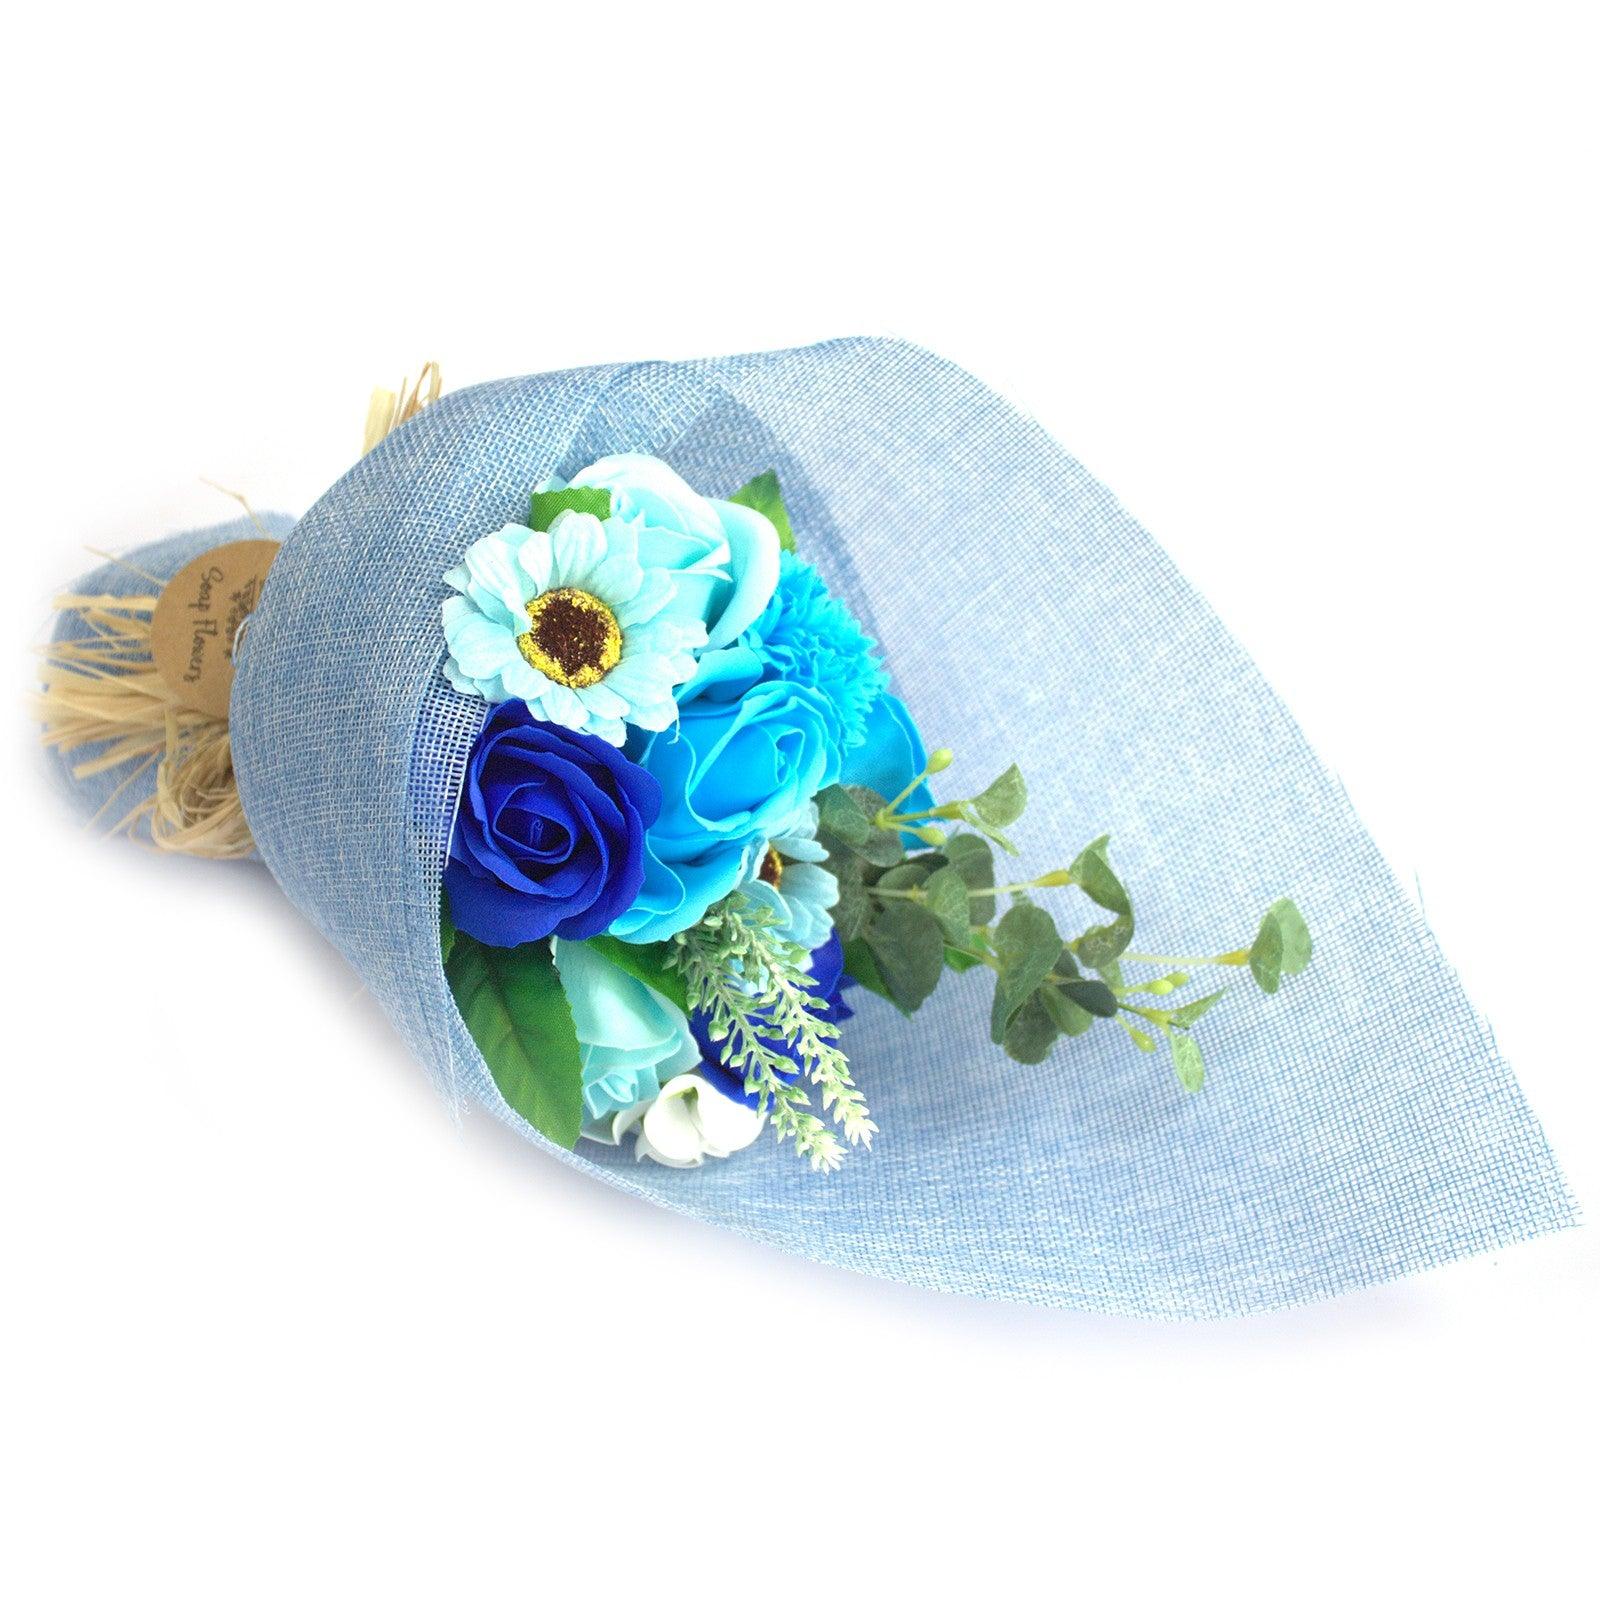 Standing Soap Flower Bouquet - Blue - DuvetDay.co.uk